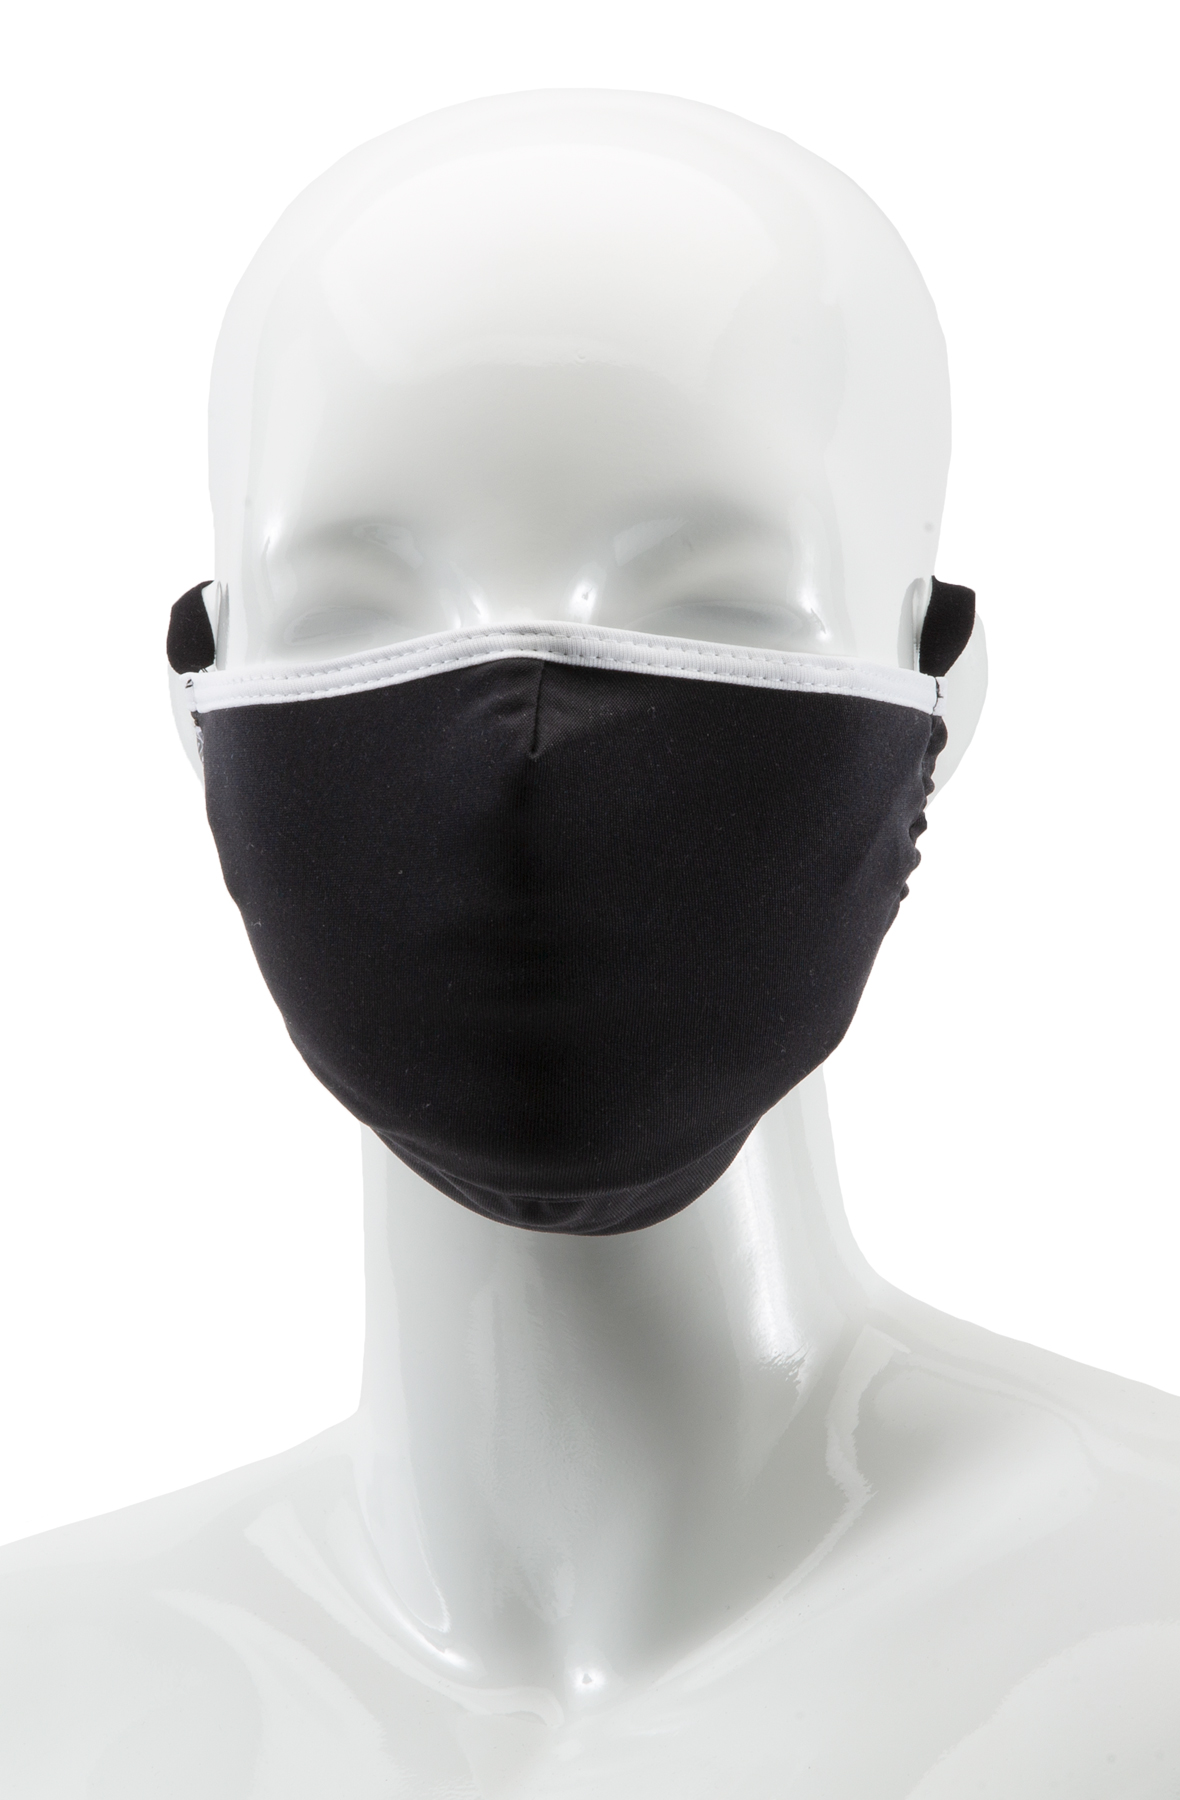 viral guard pro mask in black/white